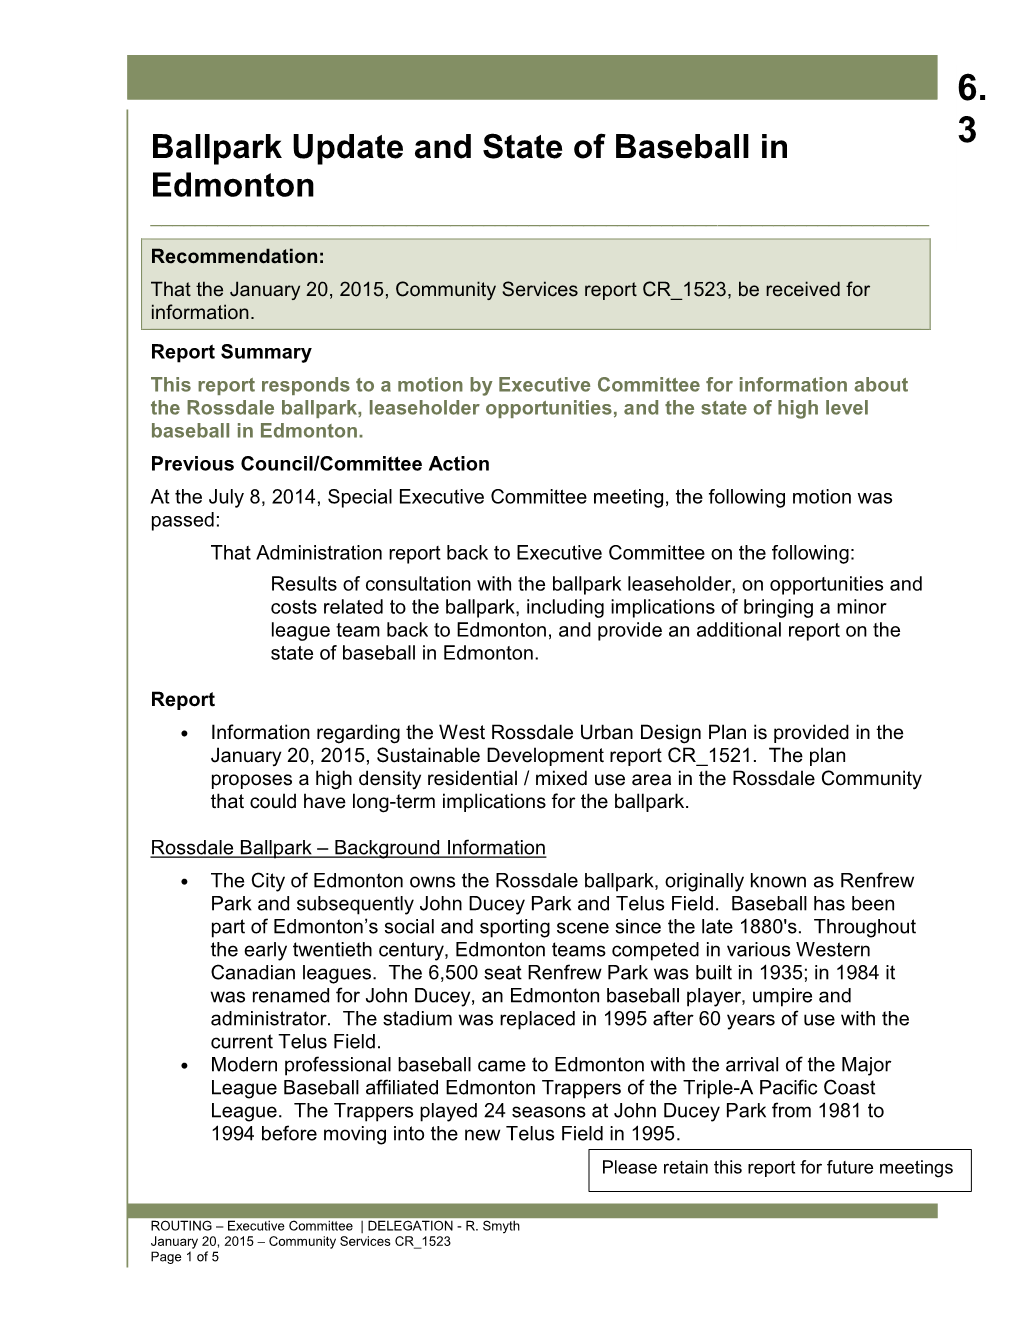 Ballpark Update and State of Baseball in Edmonton